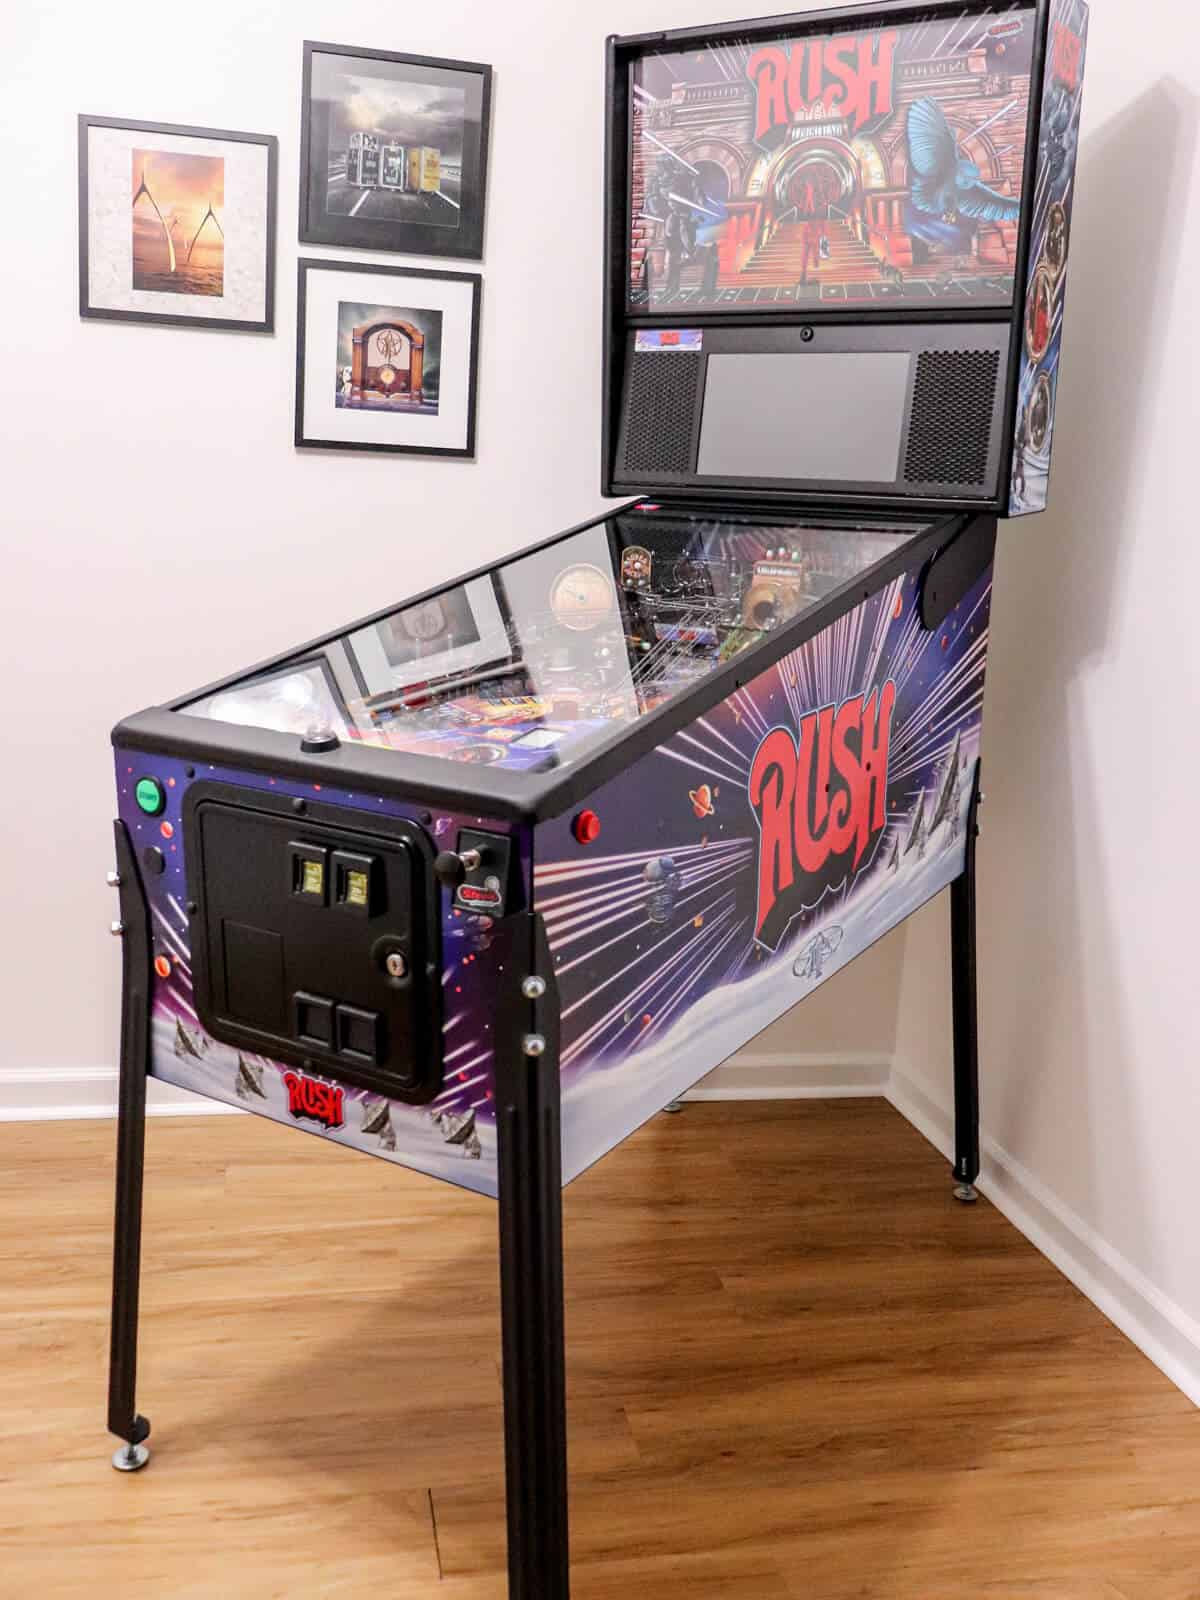 Rush pinball machine by Stern in a basement room